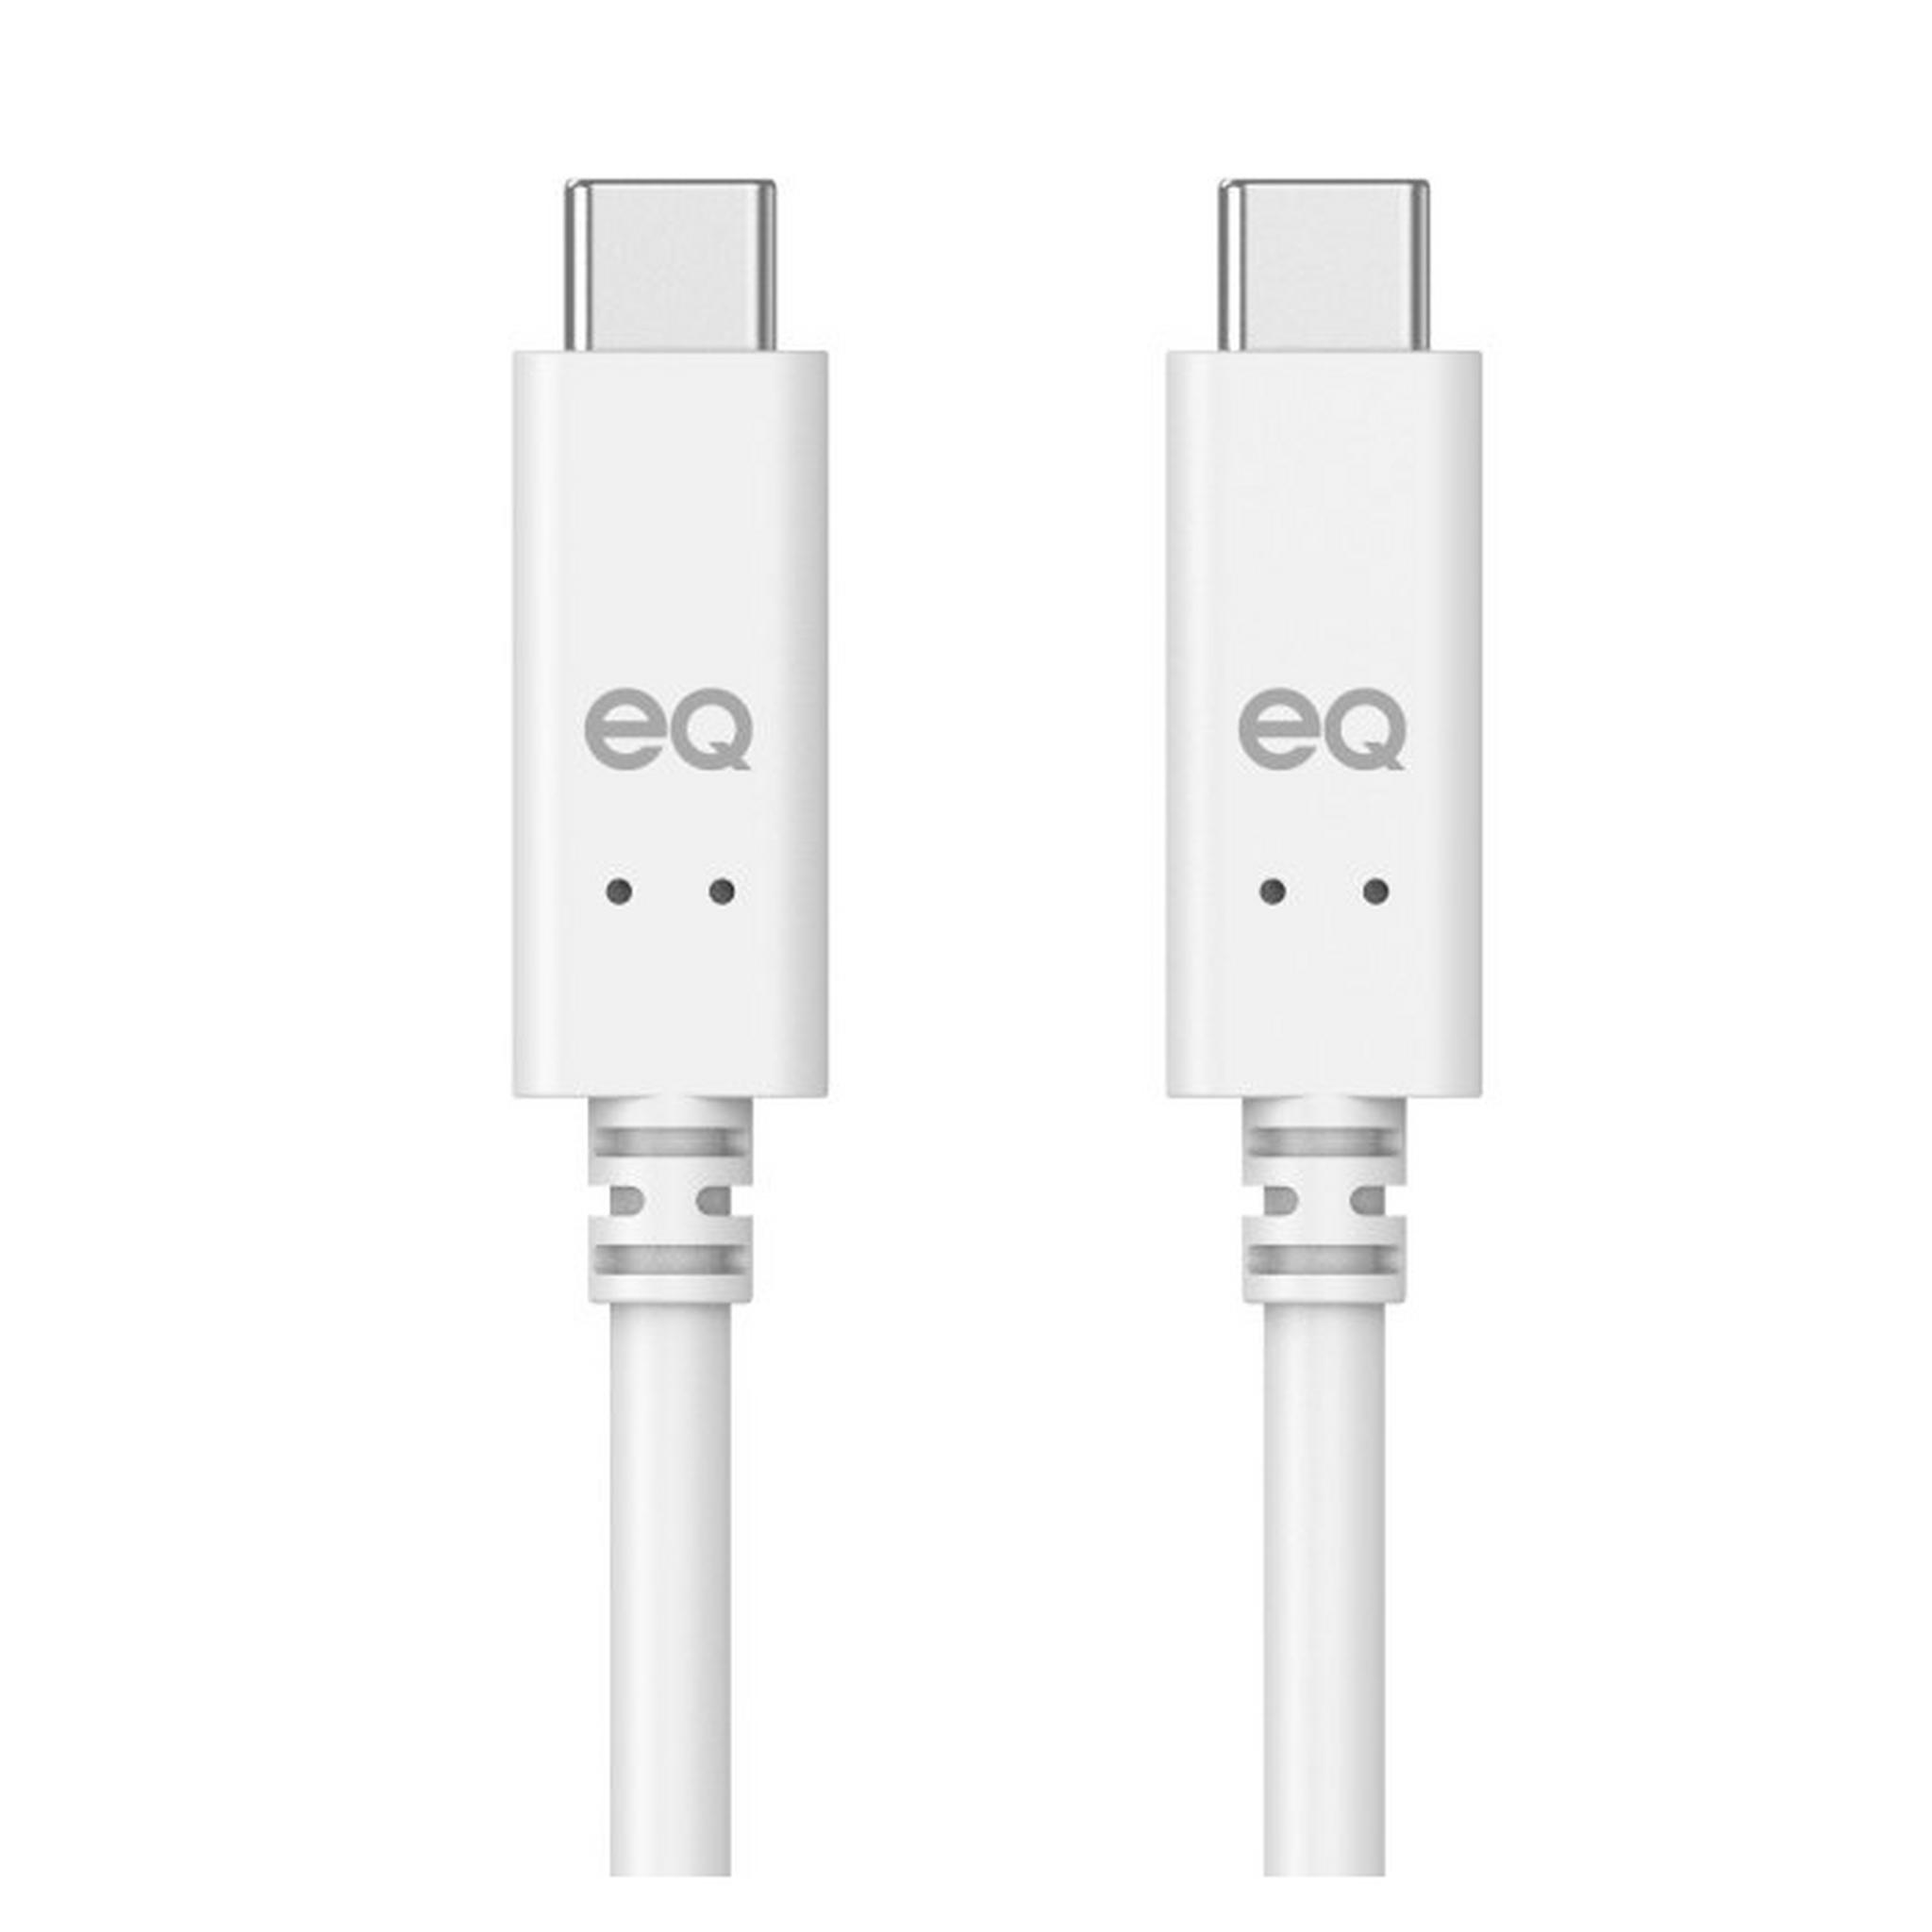 EQ Connectivity & Power Kit 1